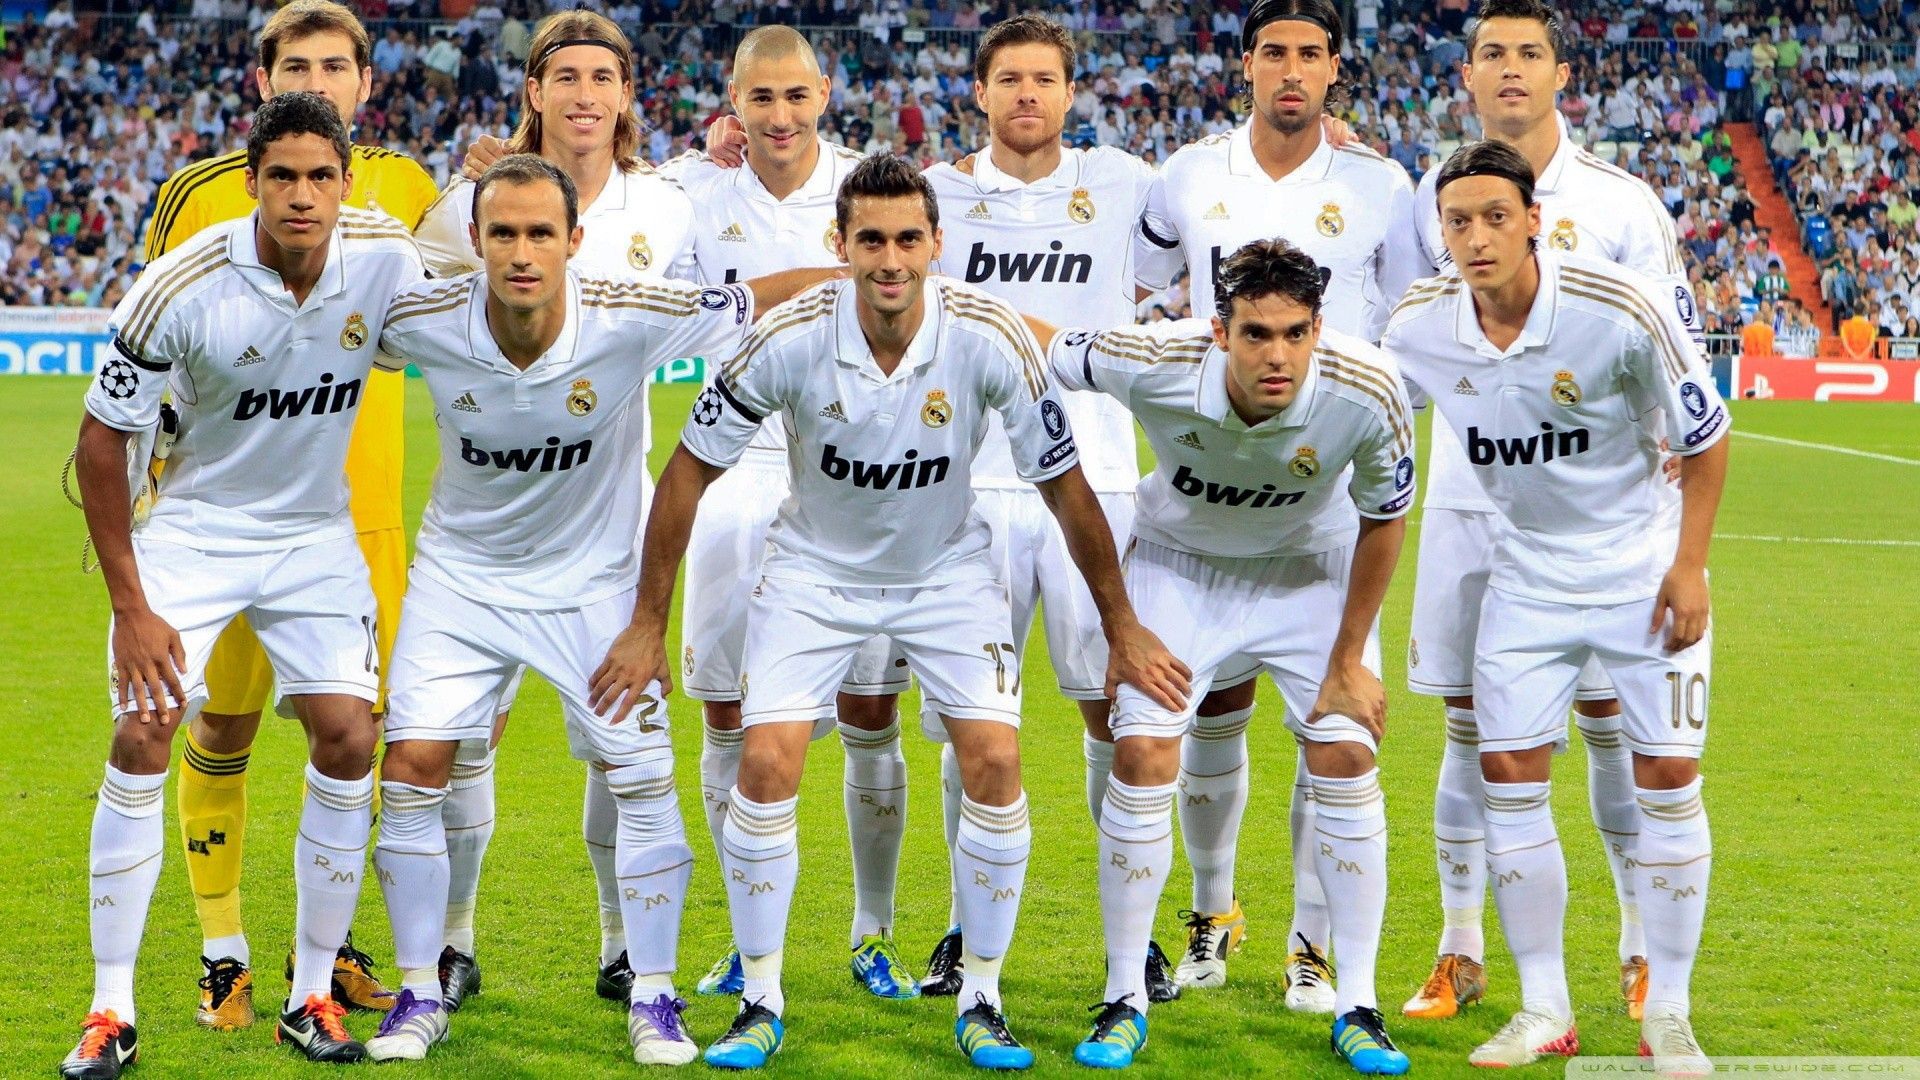 Real Madrid Wallpaper 3d